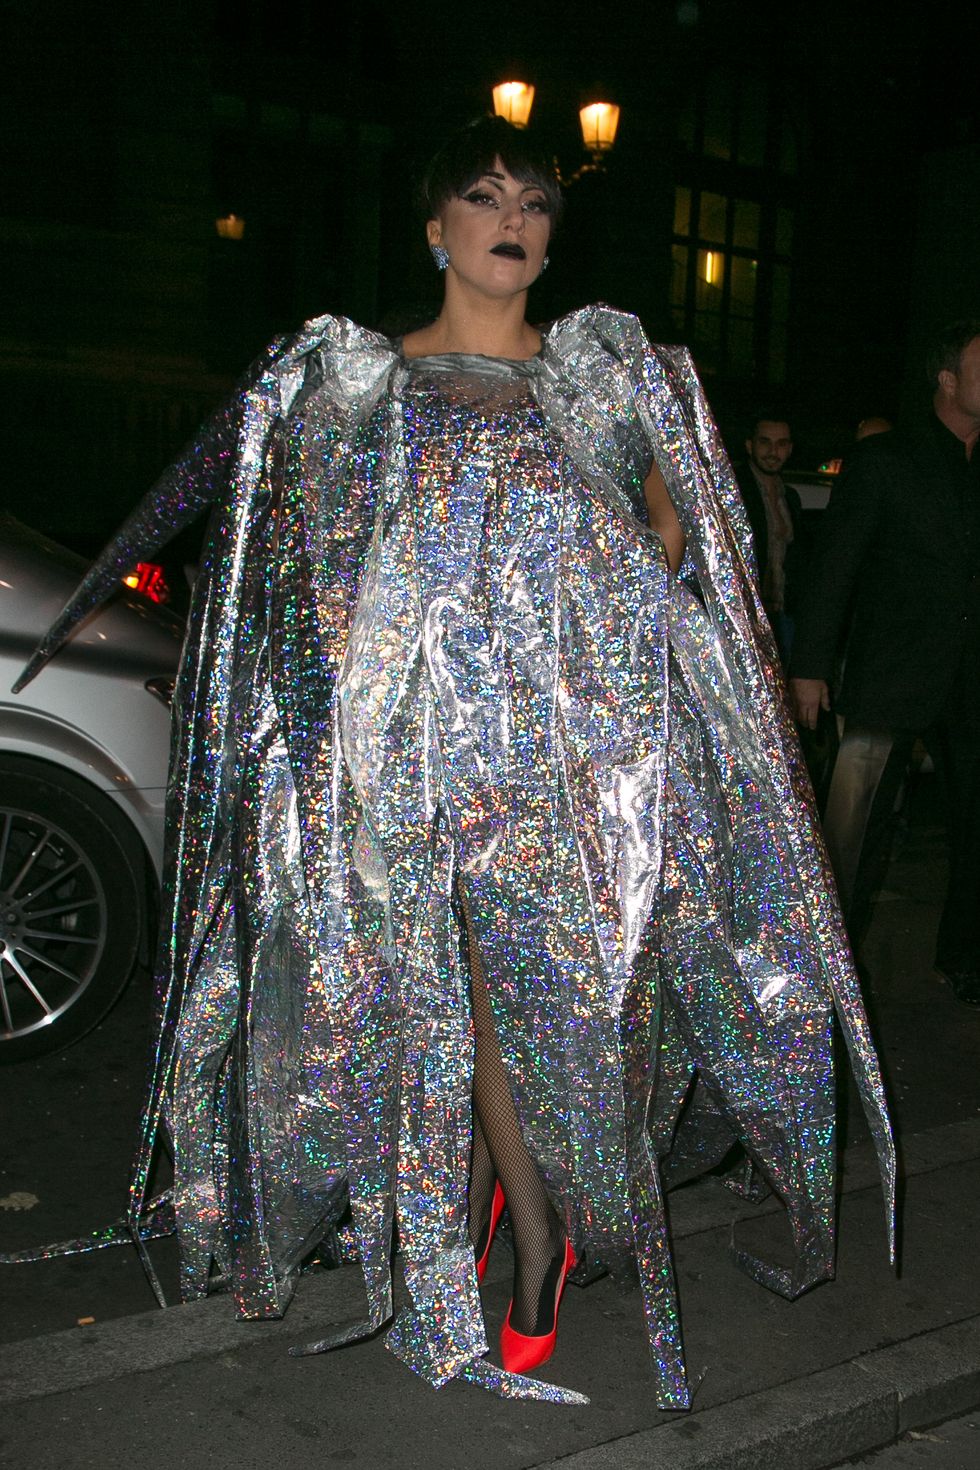 Lady Gaga wearing silver star costume